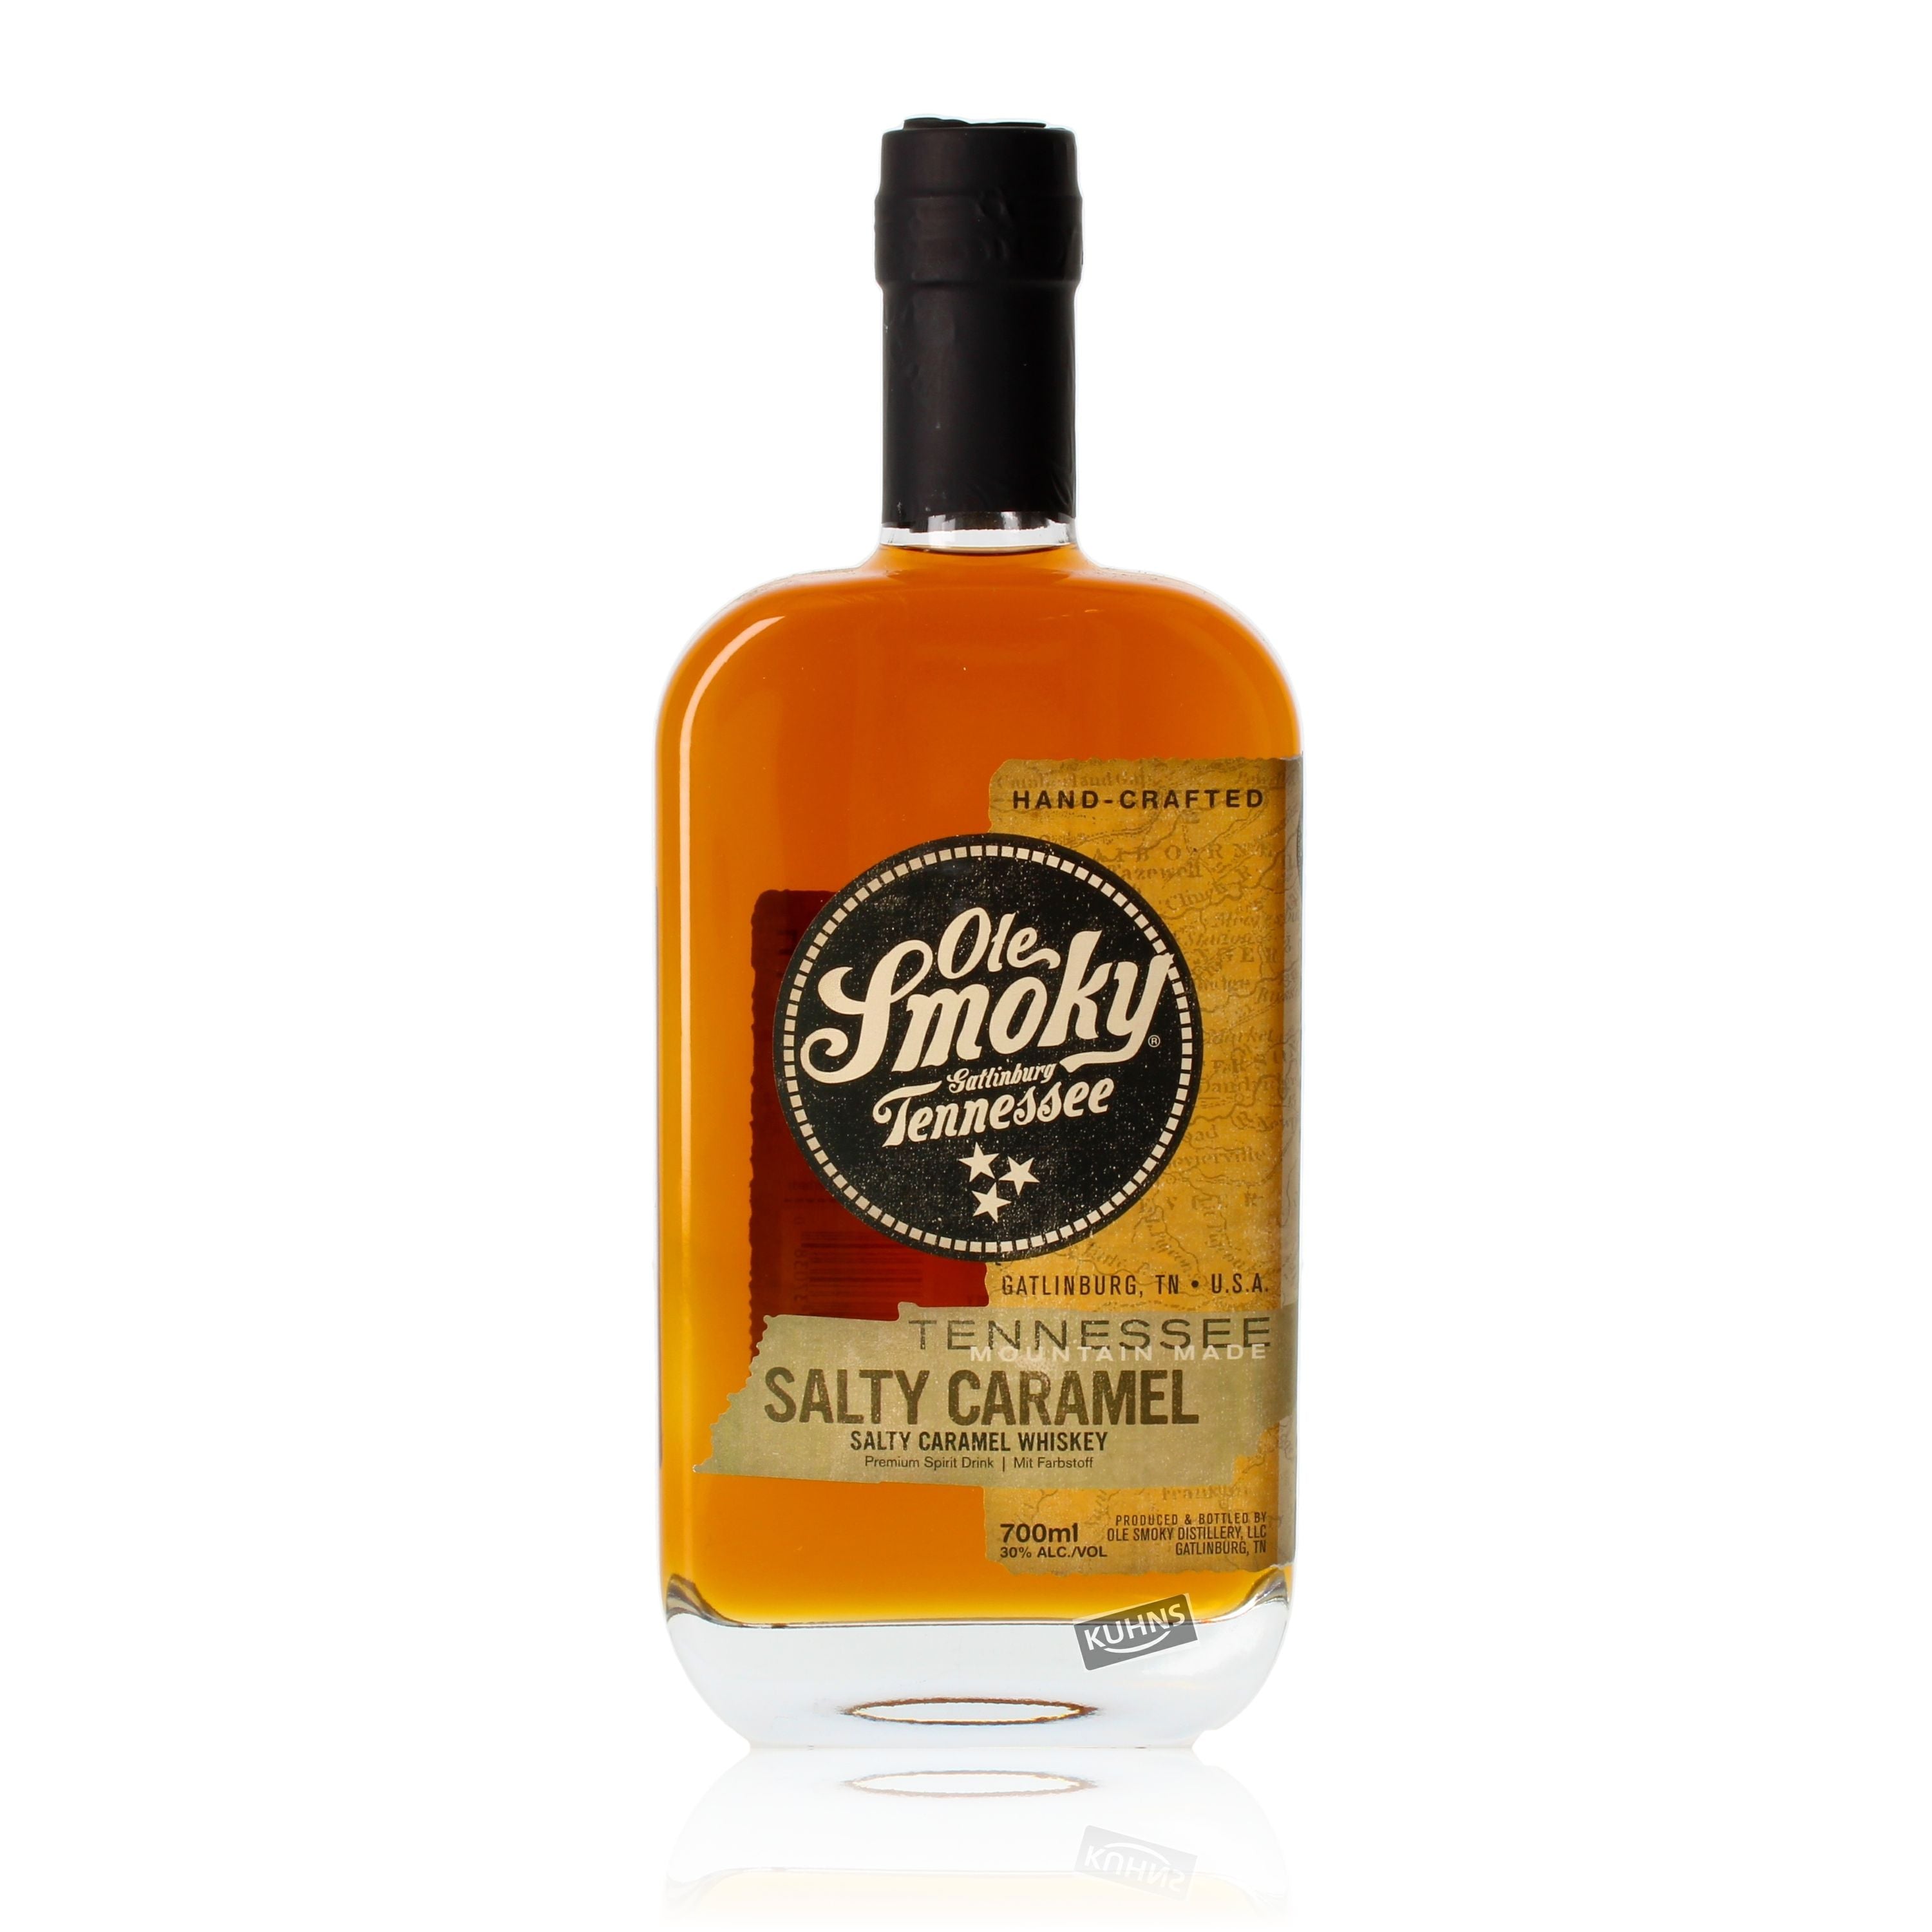 Ole Smoky Salty Caramel Whiskey 0.7l, alc. 30% by volume